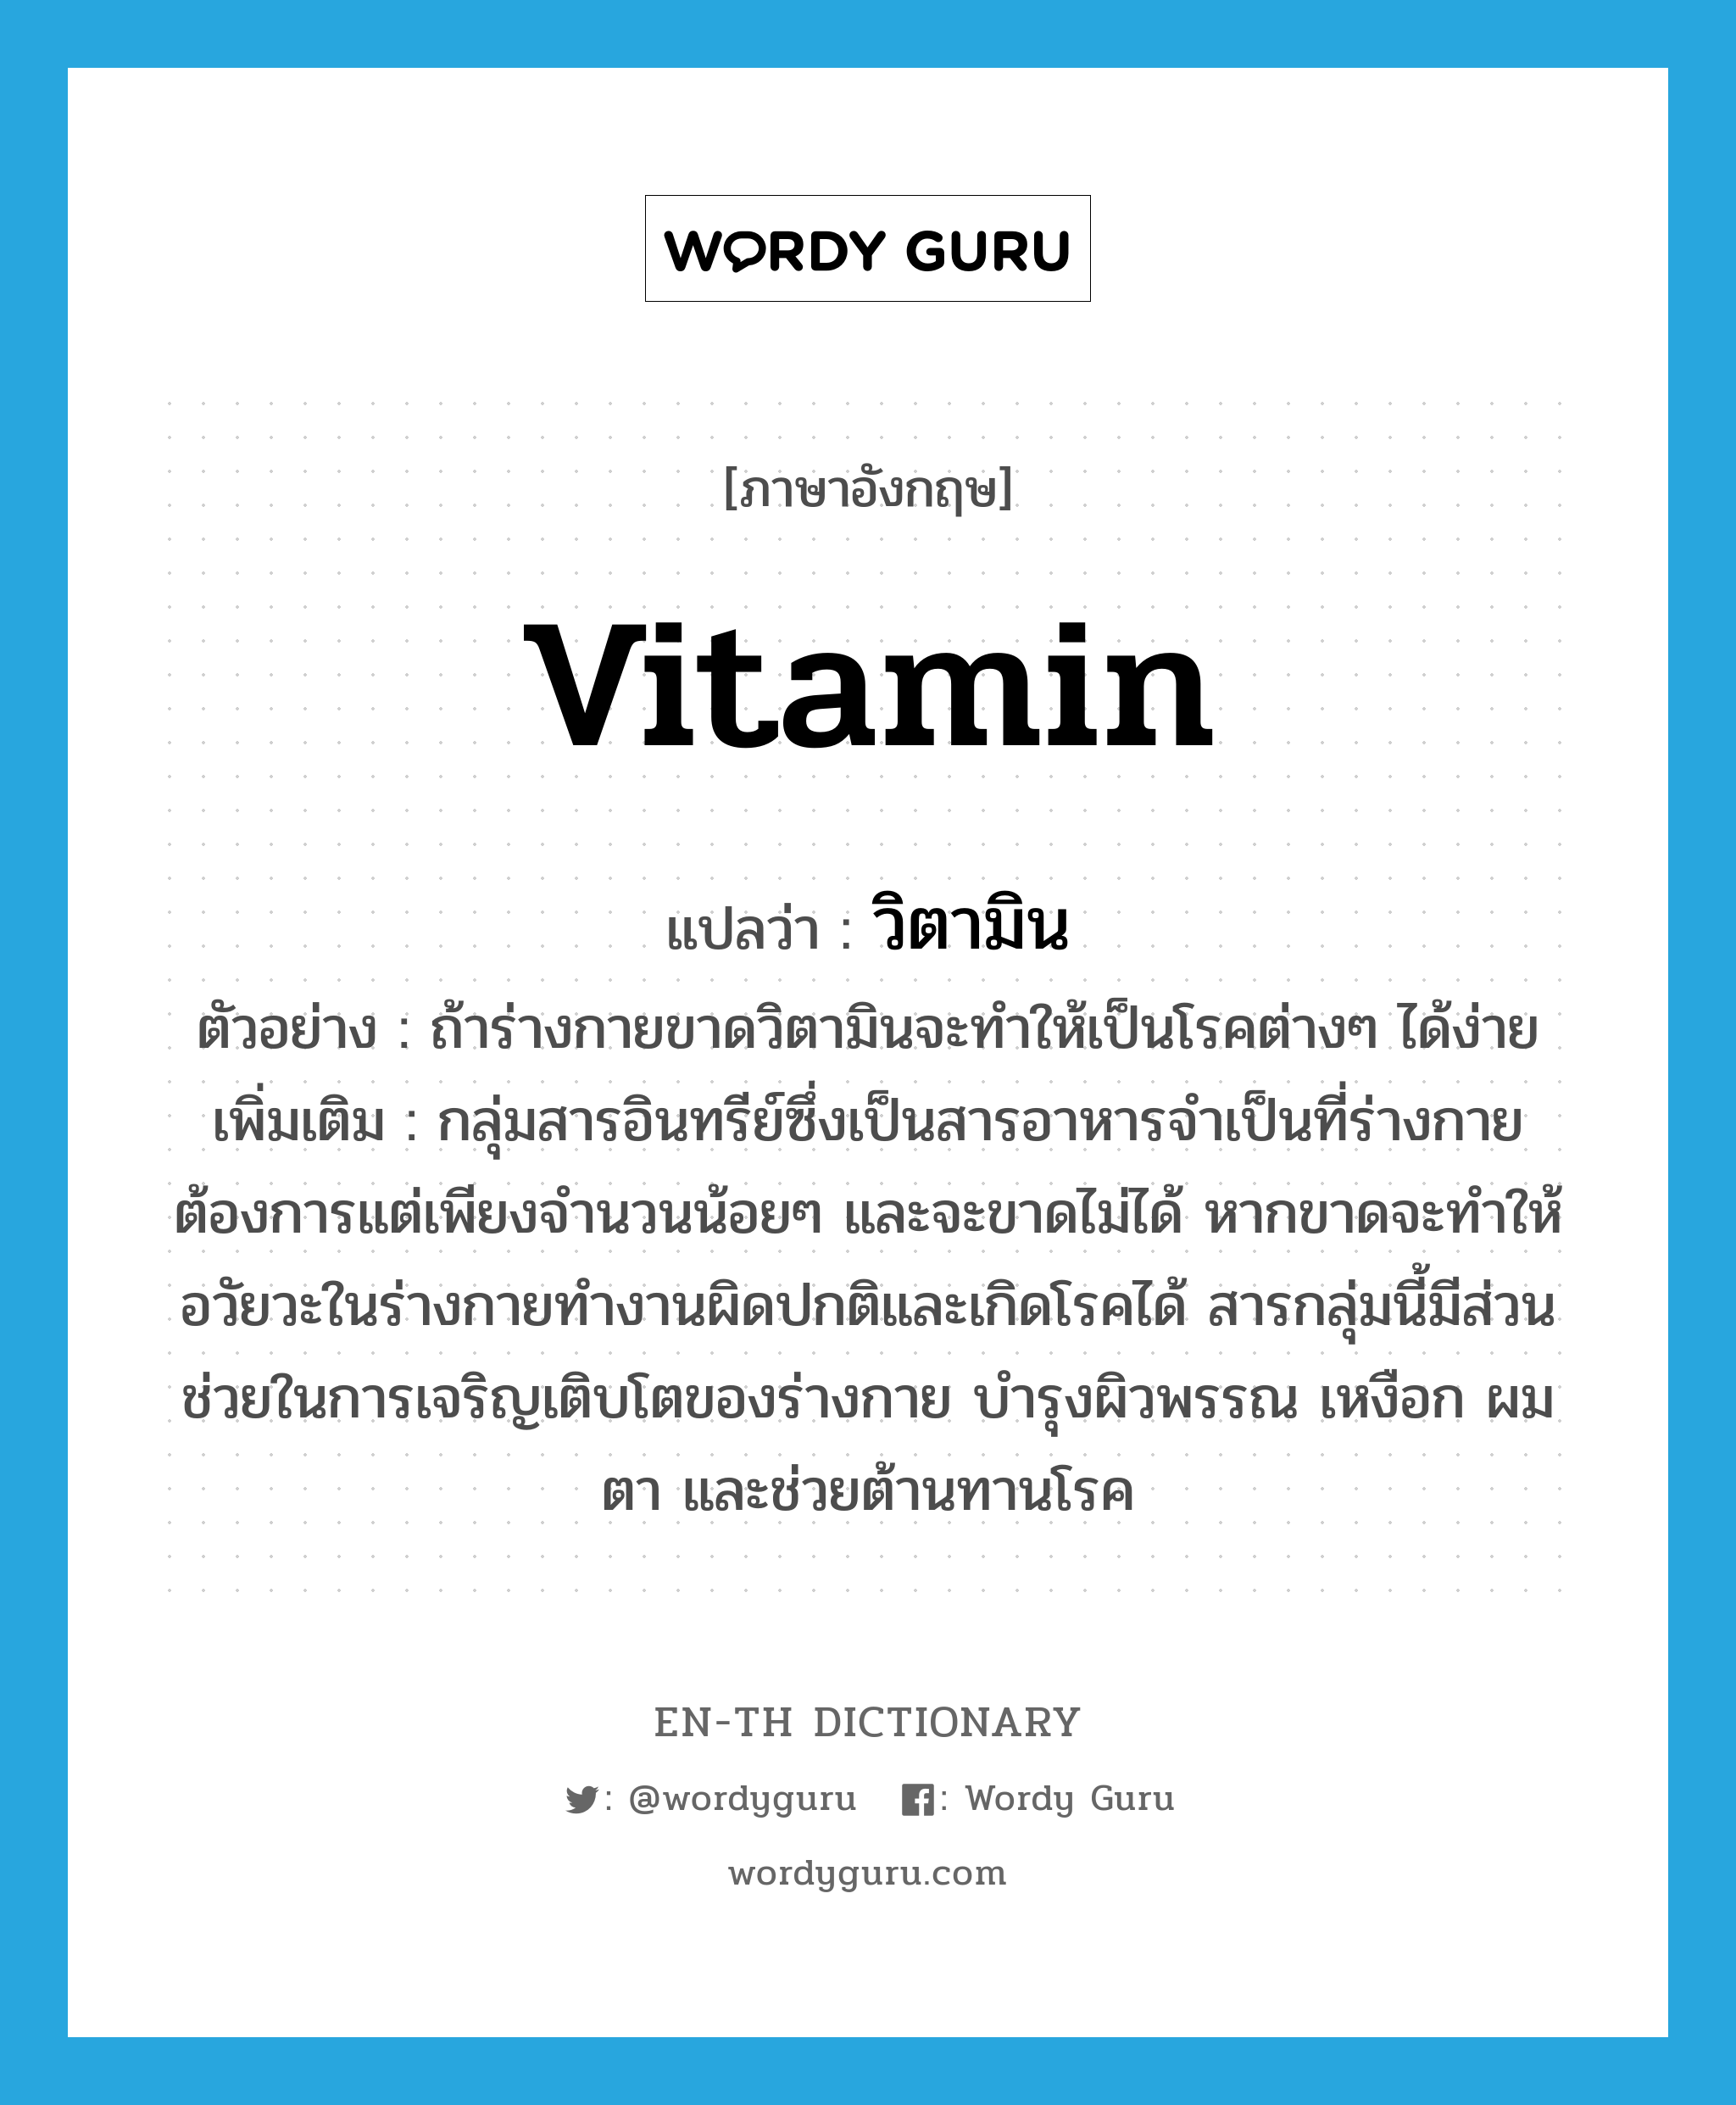 vitamin แปลว่า?, คำศัพท์ภาษาอังกฤษ vitamin แปลว่า วิตามิน ประเภท N ตัวอย่าง ถ้าร่างกายขาดวิตามินจะทำให้เป็นโรคต่างๆ ได้ง่าย เพิ่มเติม กลุ่มสารอินทรีย์ซึ่งเป็นสารอาหารจำเป็นที่ร่างกายต้องการแต่เพียงจำนวนน้อยๆ และจะขาดไม่ได้ หากขาดจะทำให้อวัยวะในร่างกายทำงานผิดปกติและเกิดโรคได้ สารกลุ่มนี้มีส่วนช่วยในการเจริญเติบโตของร่างกาย บำรุงผิวพรรณ เหงือก ผม ตา และช่วยต้านทานโรค หมวด N